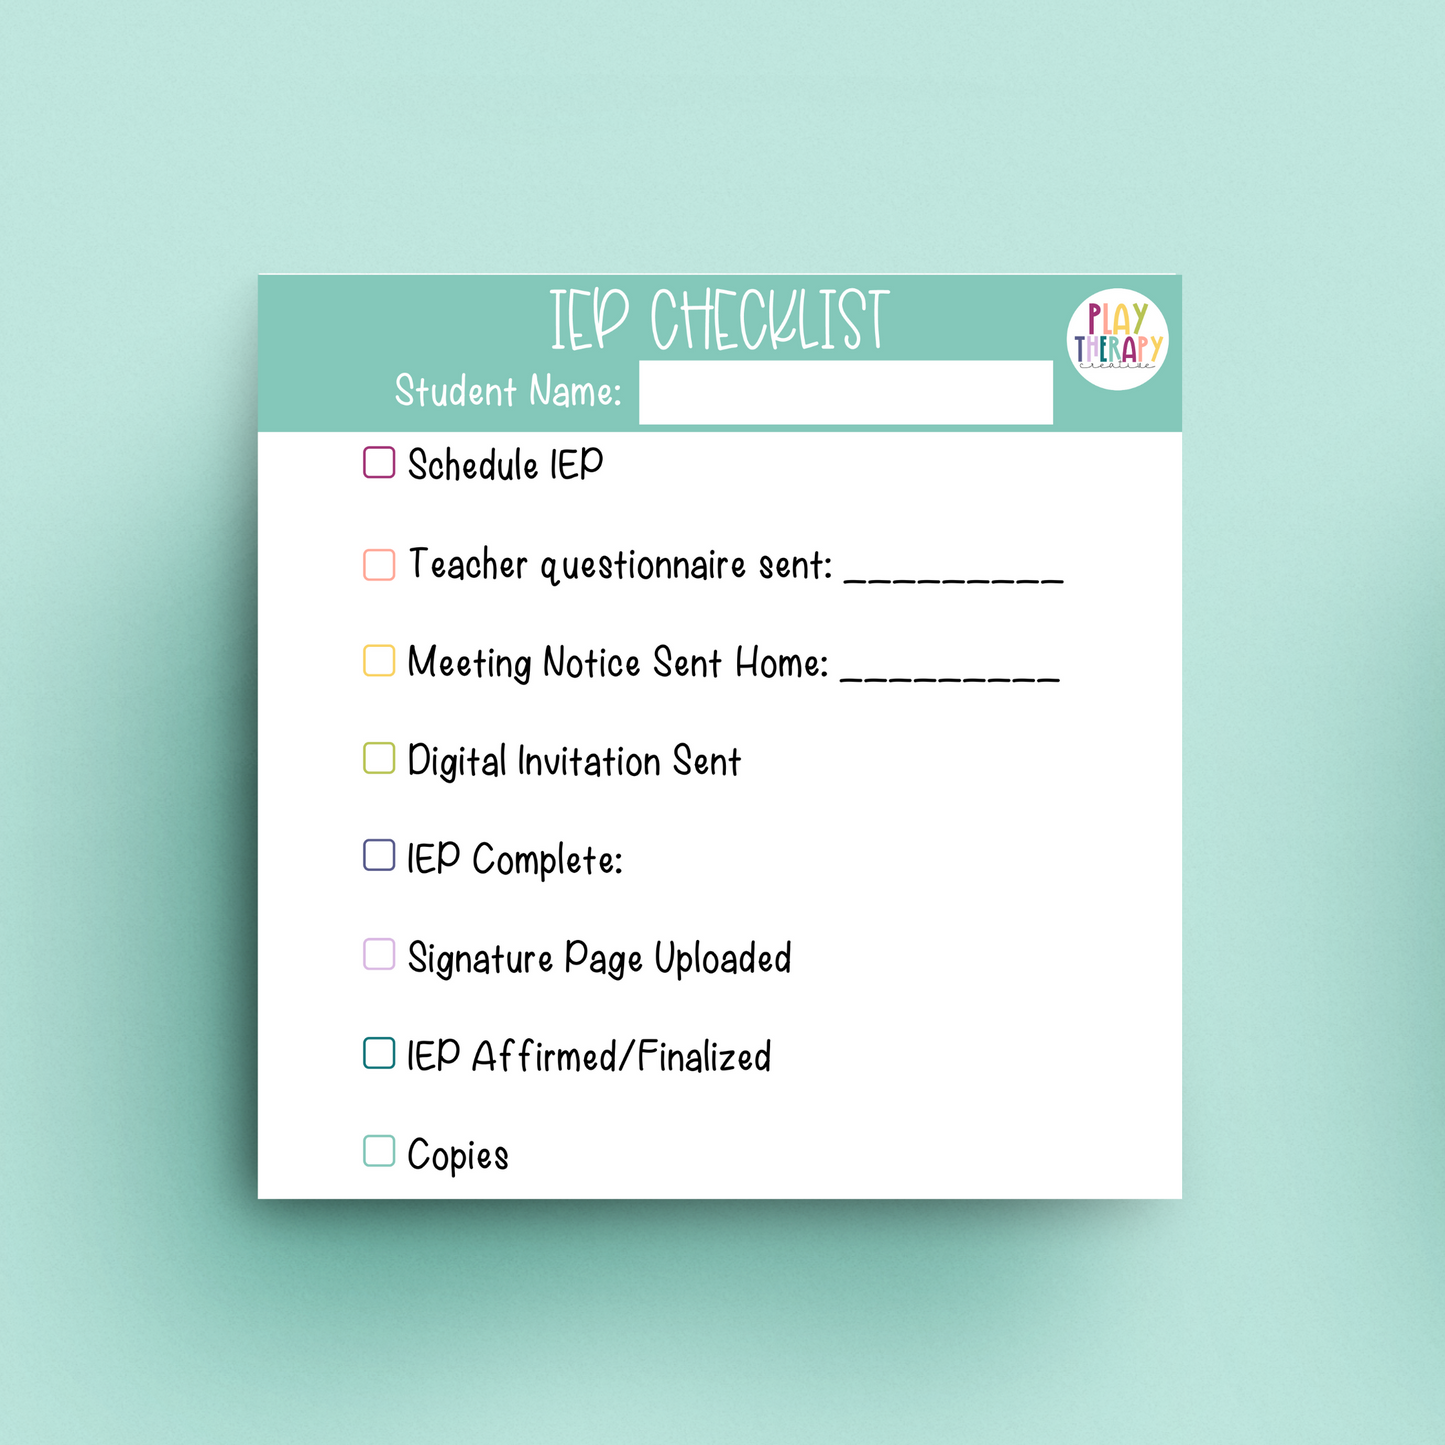 IEP Checklist Sticky Notes